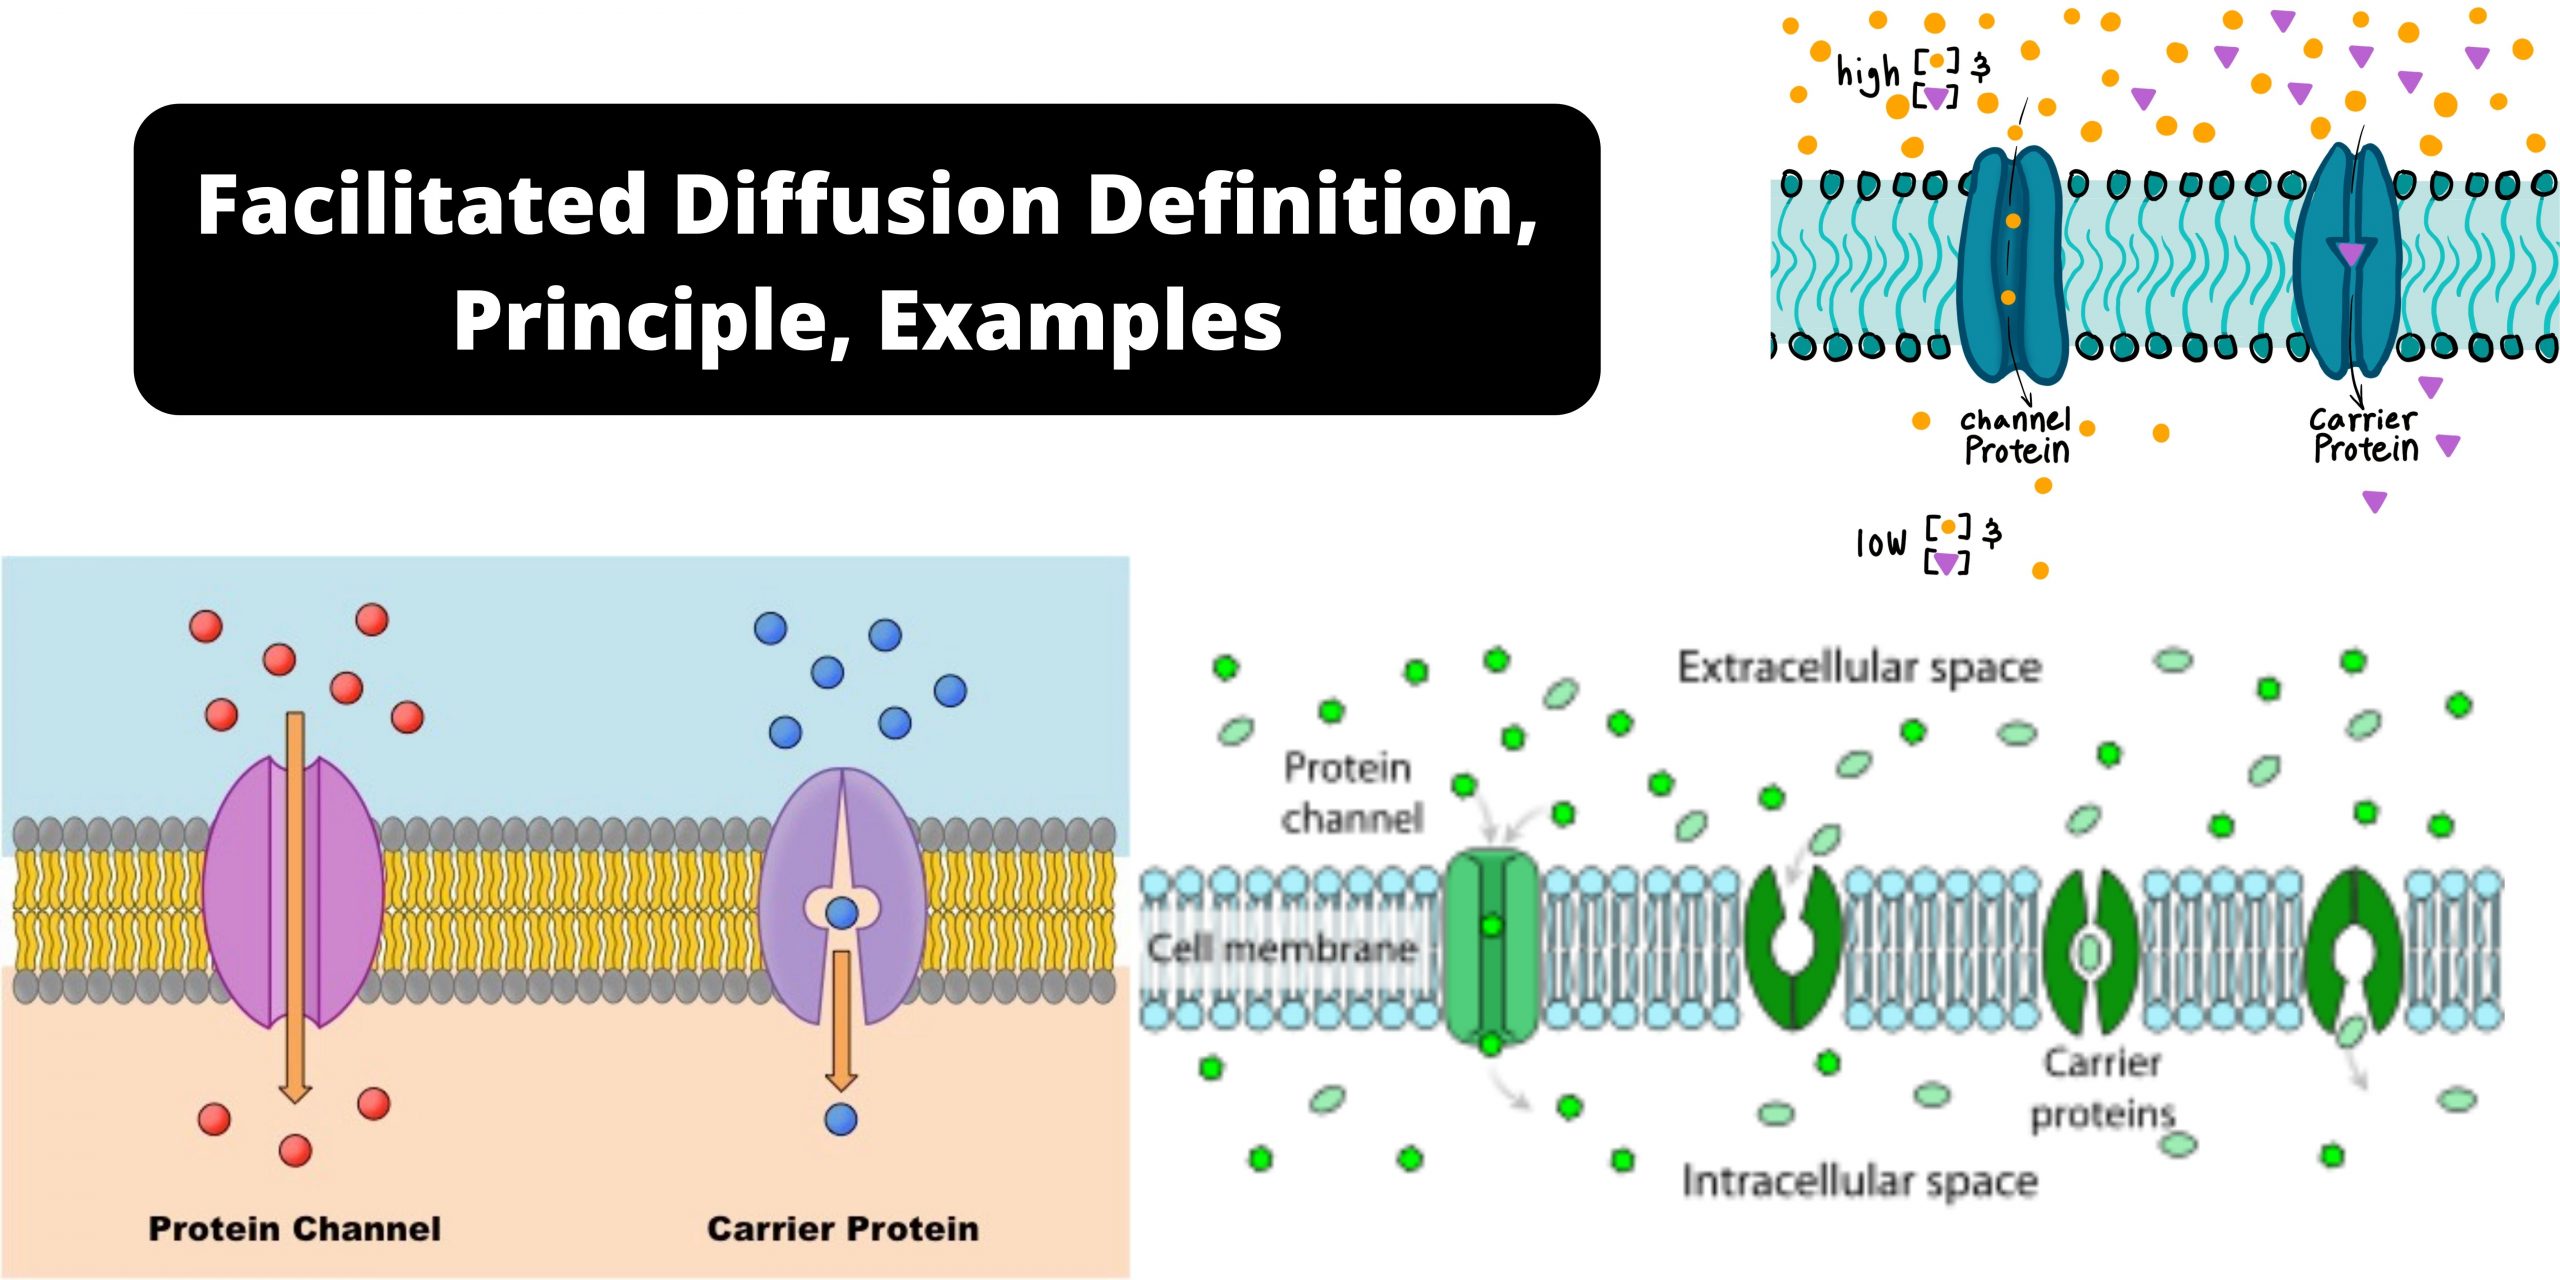 Facilitated Diffusion Definition, Principle, Examples